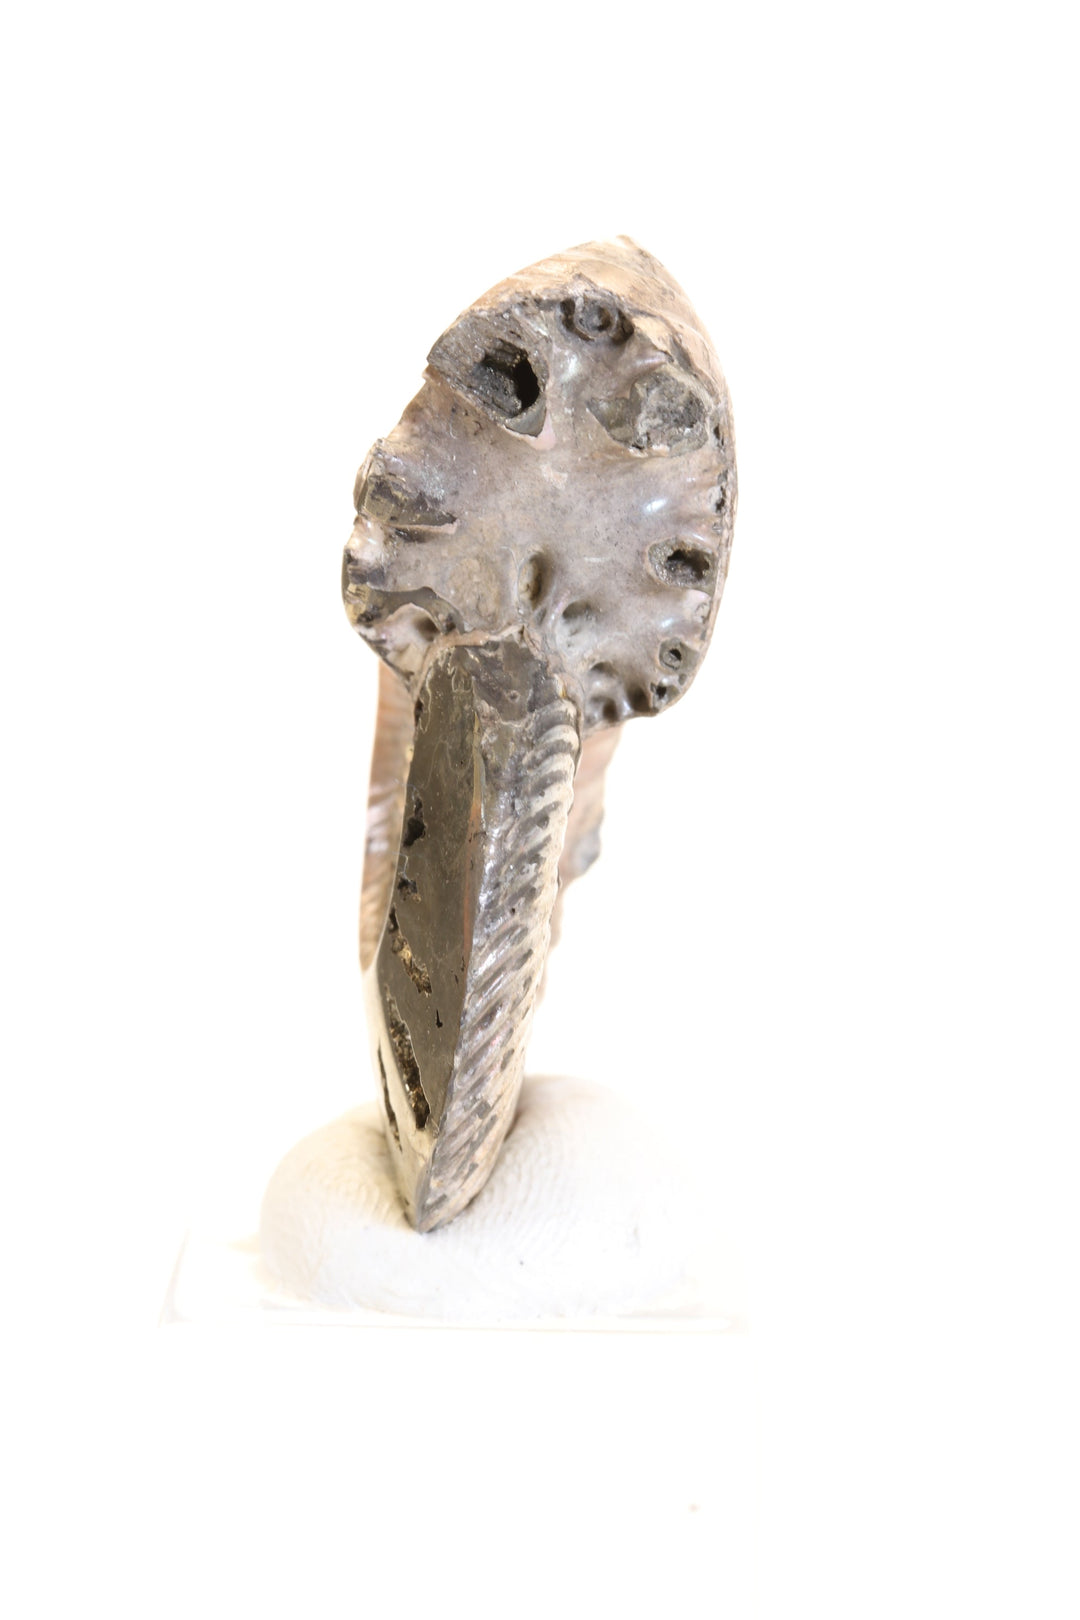 Pyritized Ammonite Fossil TD1775